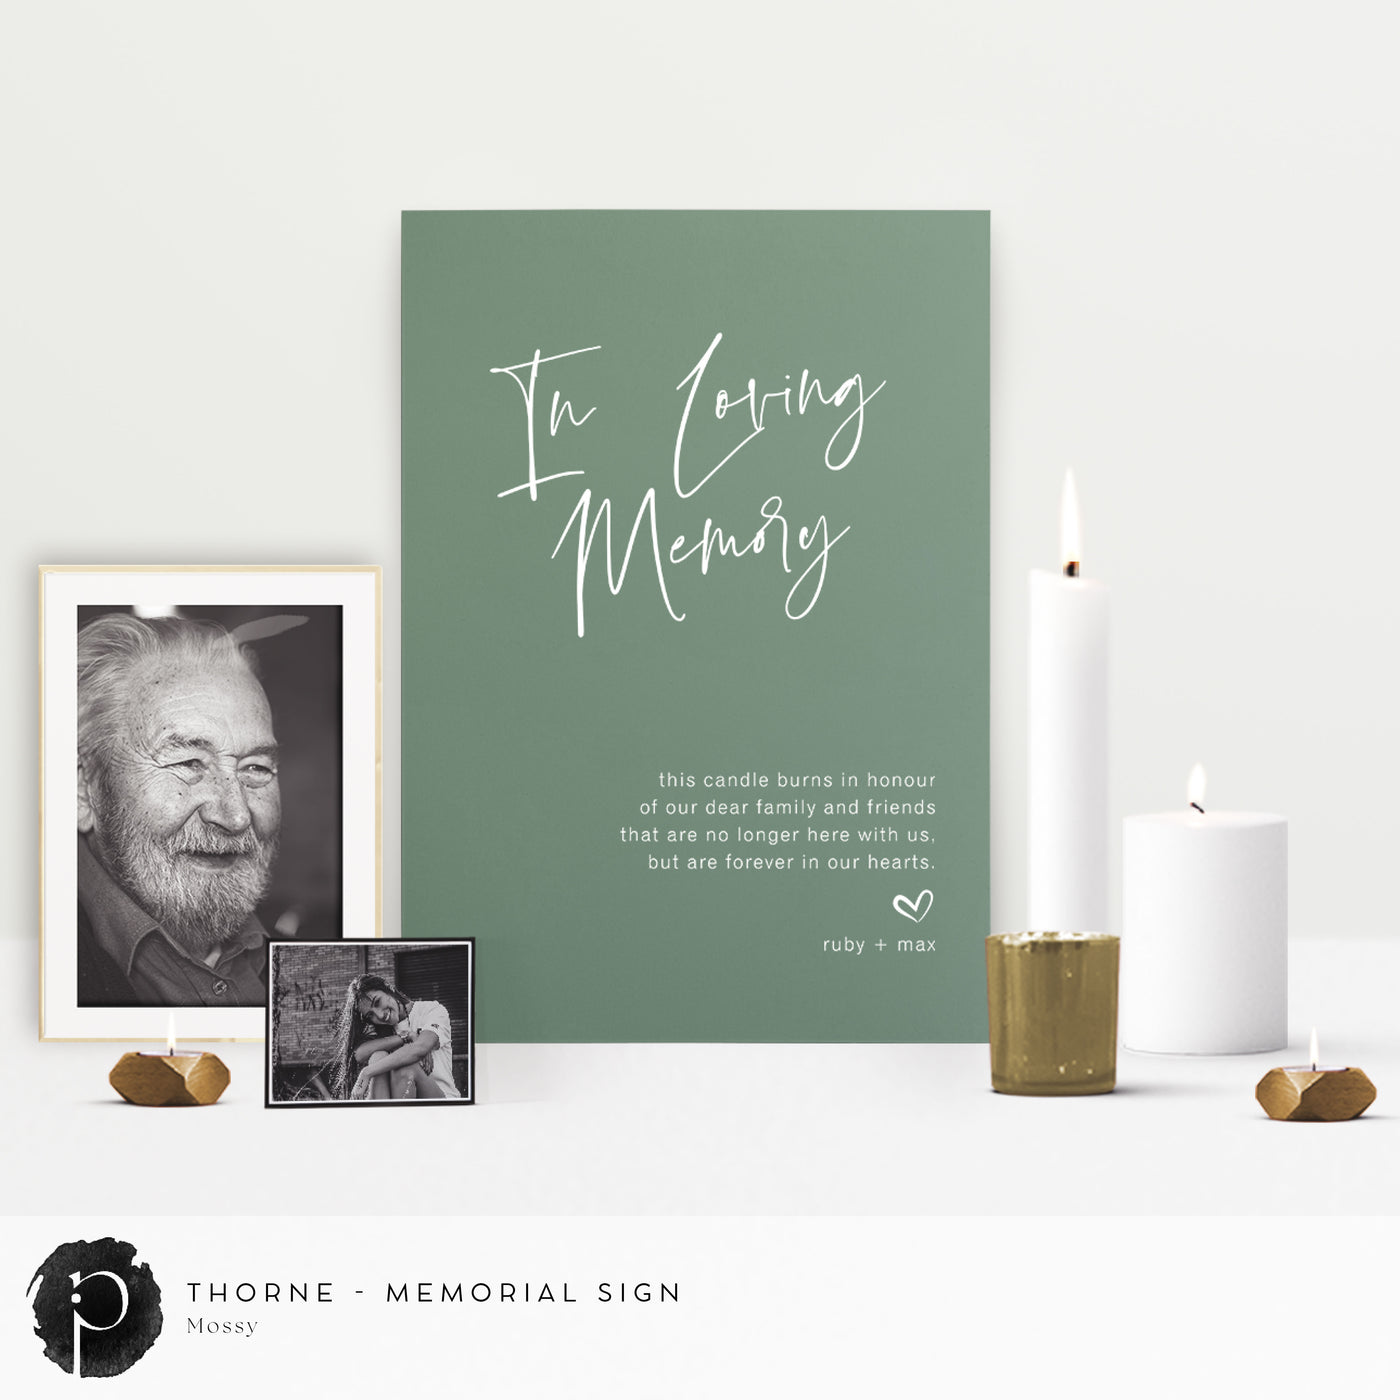 Thorne - In Loving Memory Memorial Sign